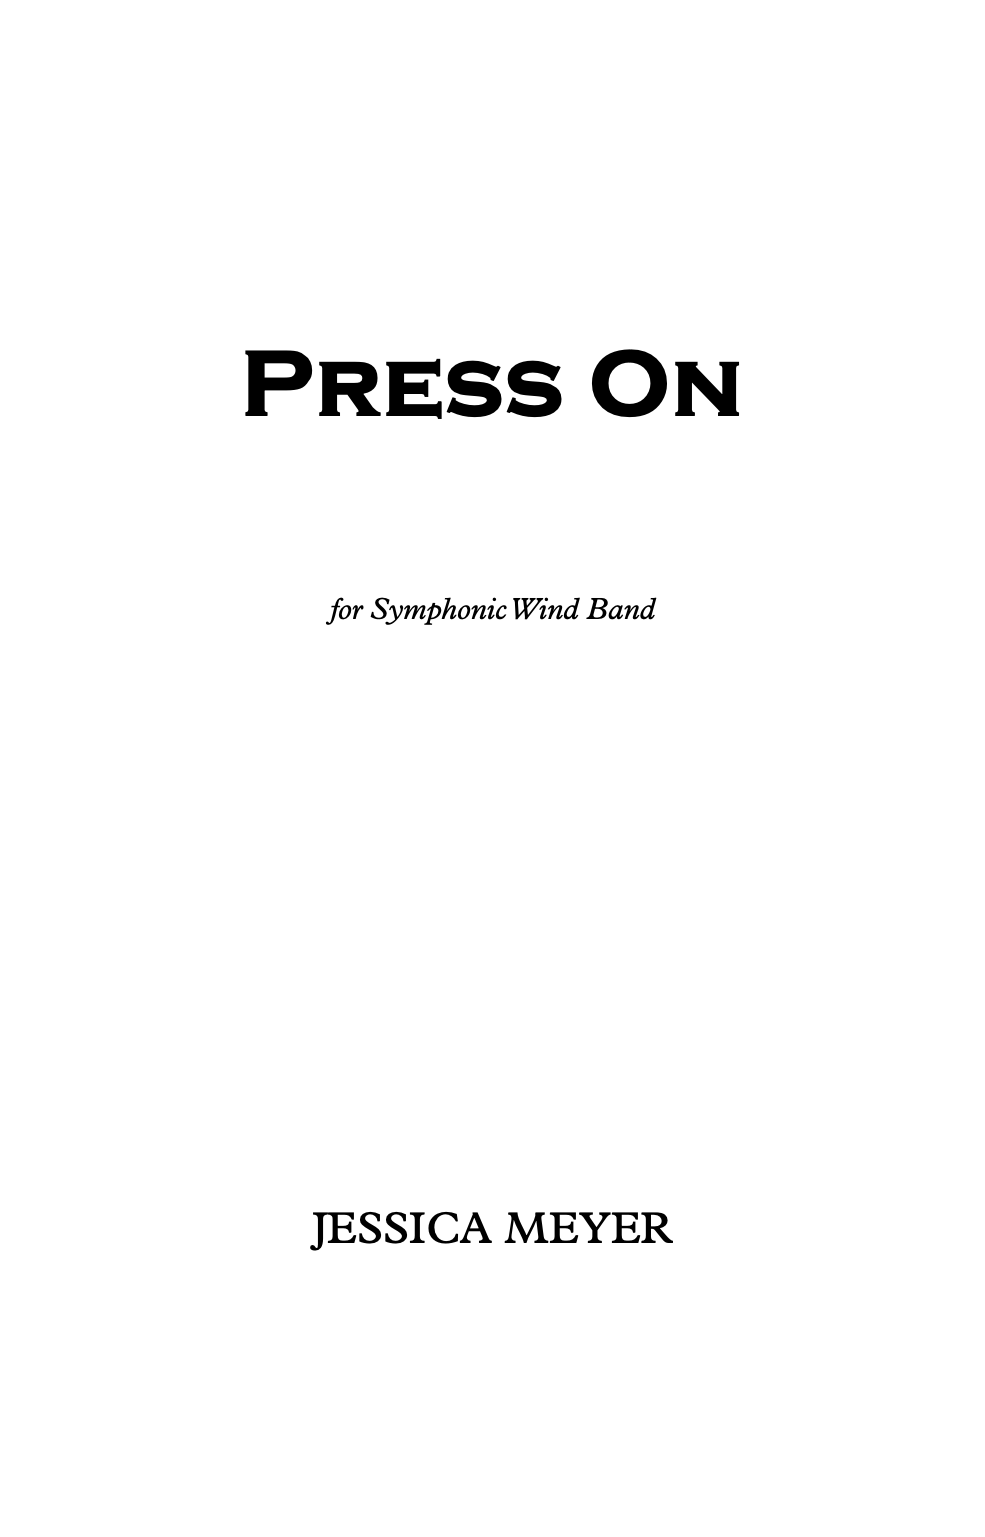 Press On by Jessica Meyer